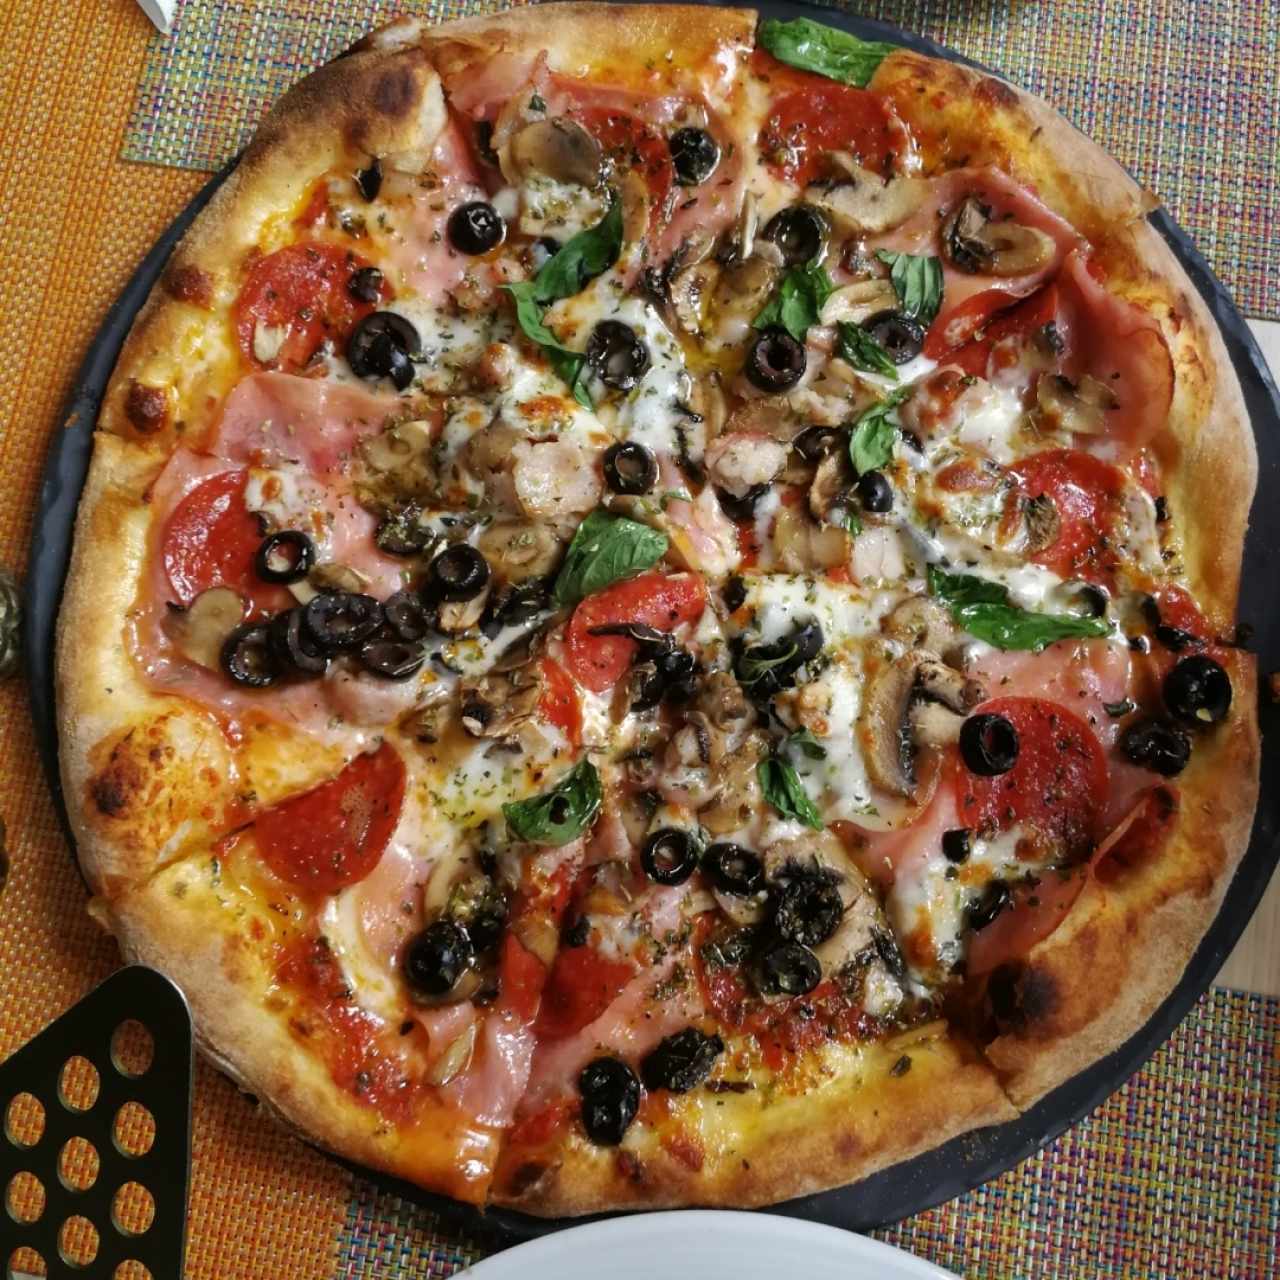 Pizzas Especiales 12" 18" - Don Tomasino 14$ - 26.50$